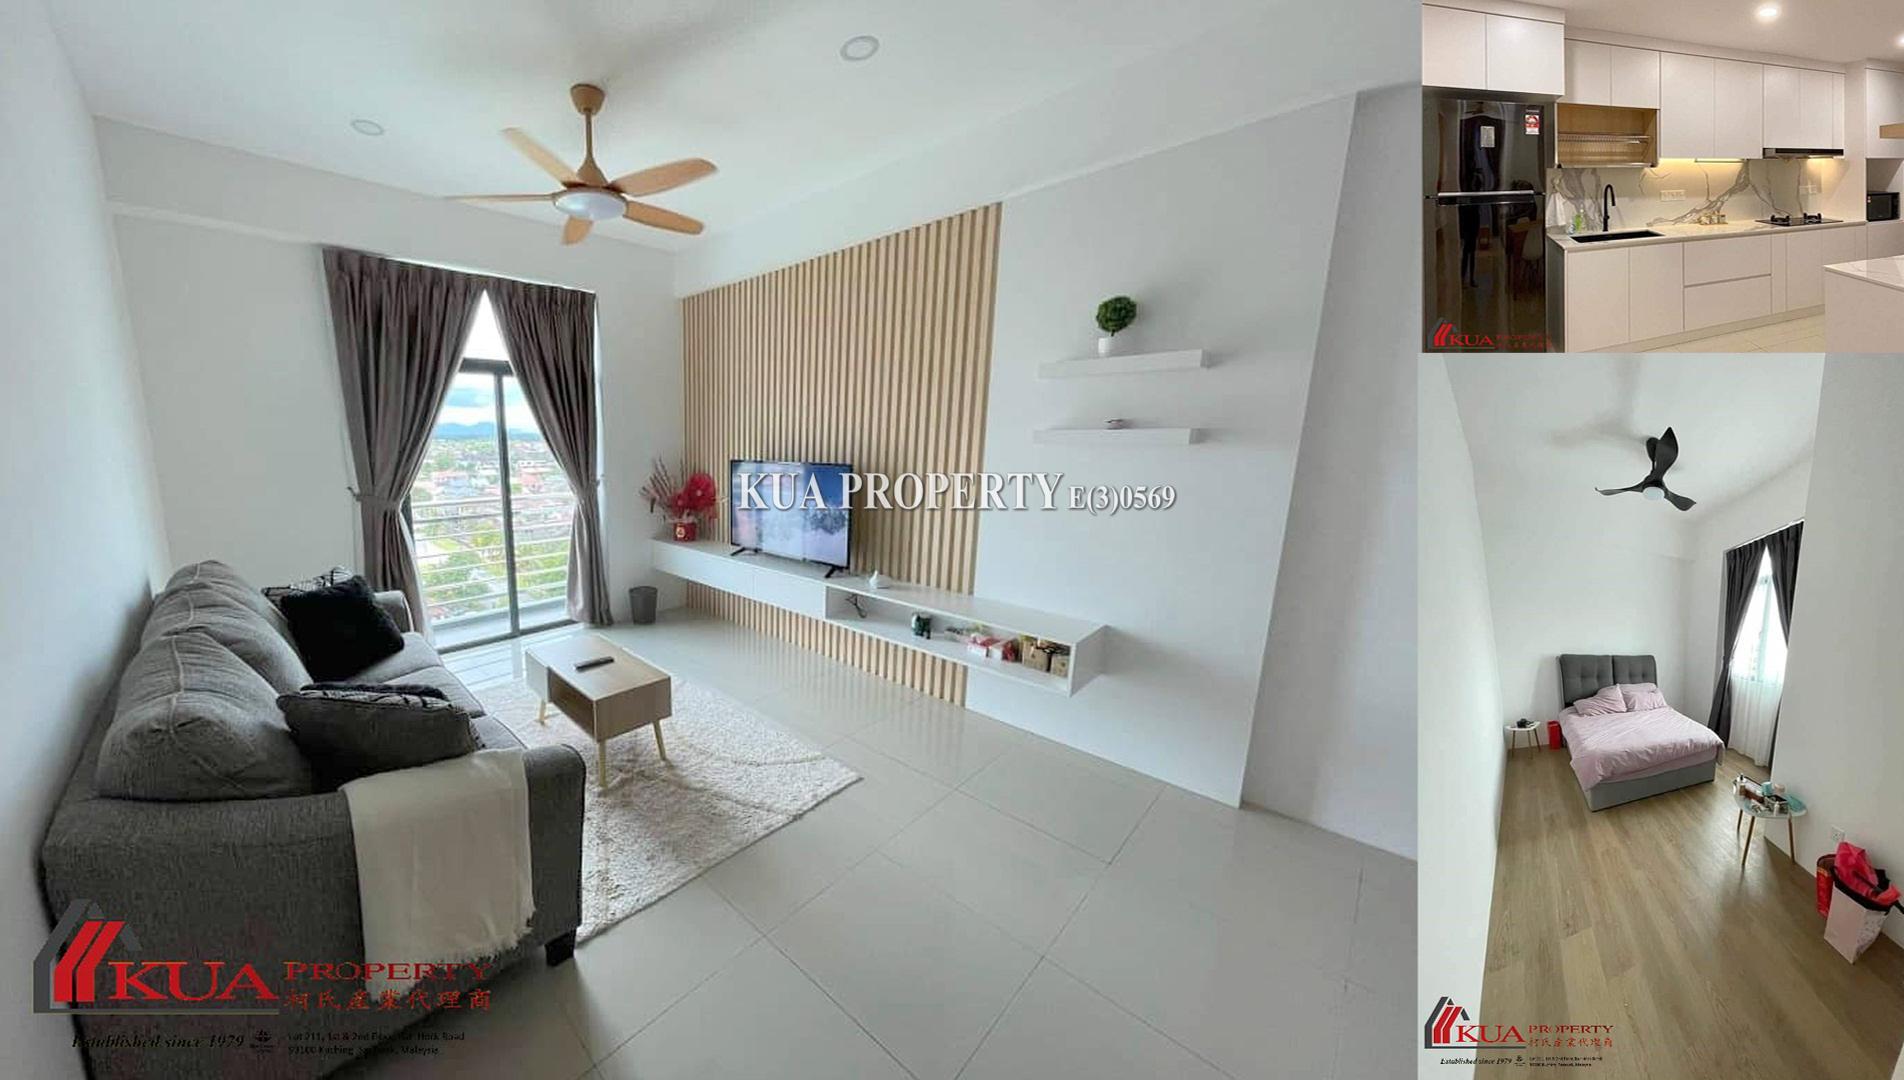 Laticube Apartment For Rent! at 3rd Mile, Jalan Burung Lilin